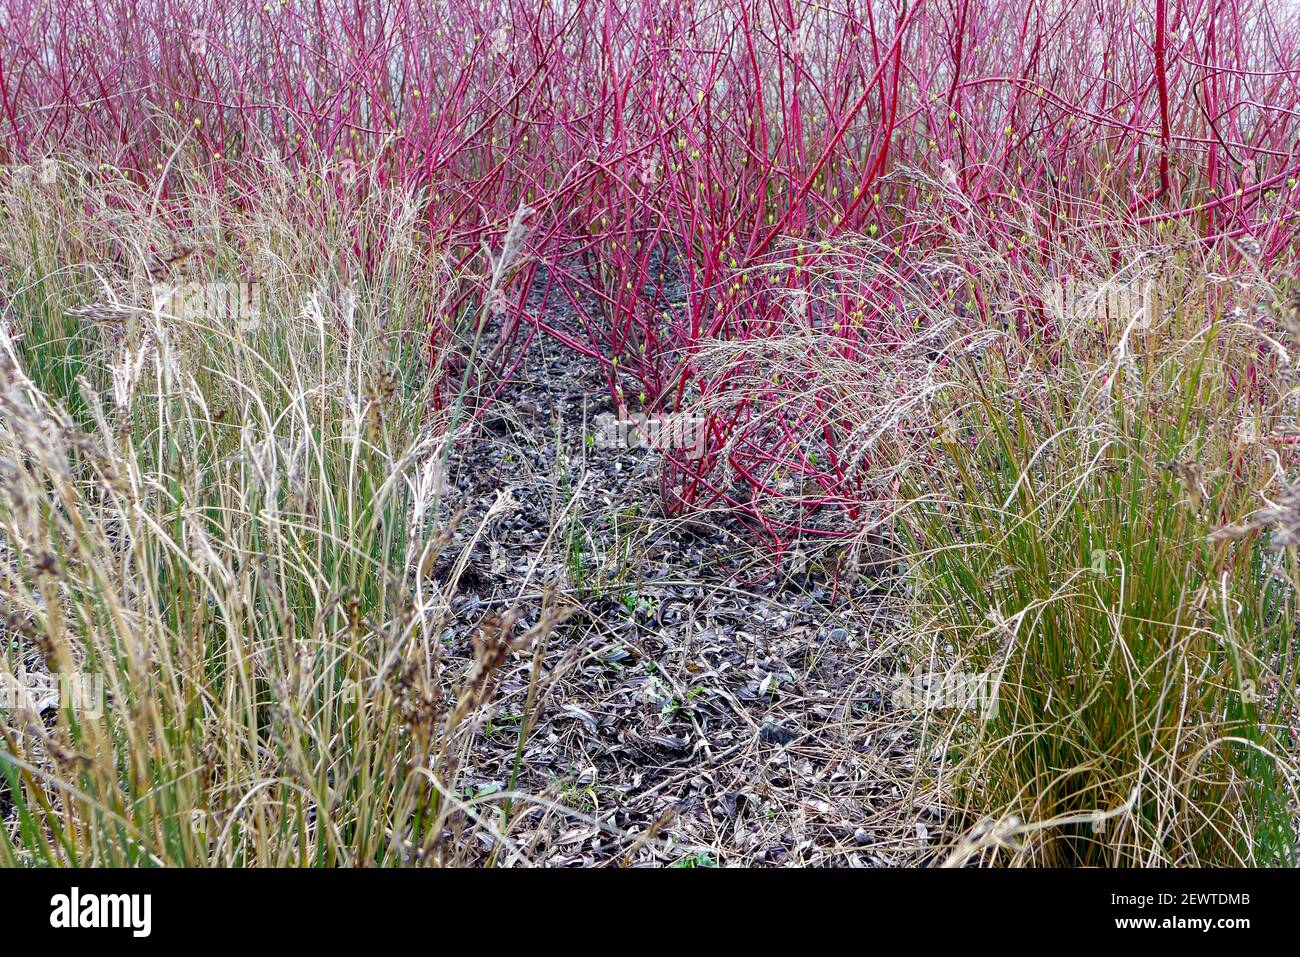 Bush of Common Dogwood, Cornus sanguinea, and Tufted Hair Grass, Deschampsia cespitosa, Stock Photo